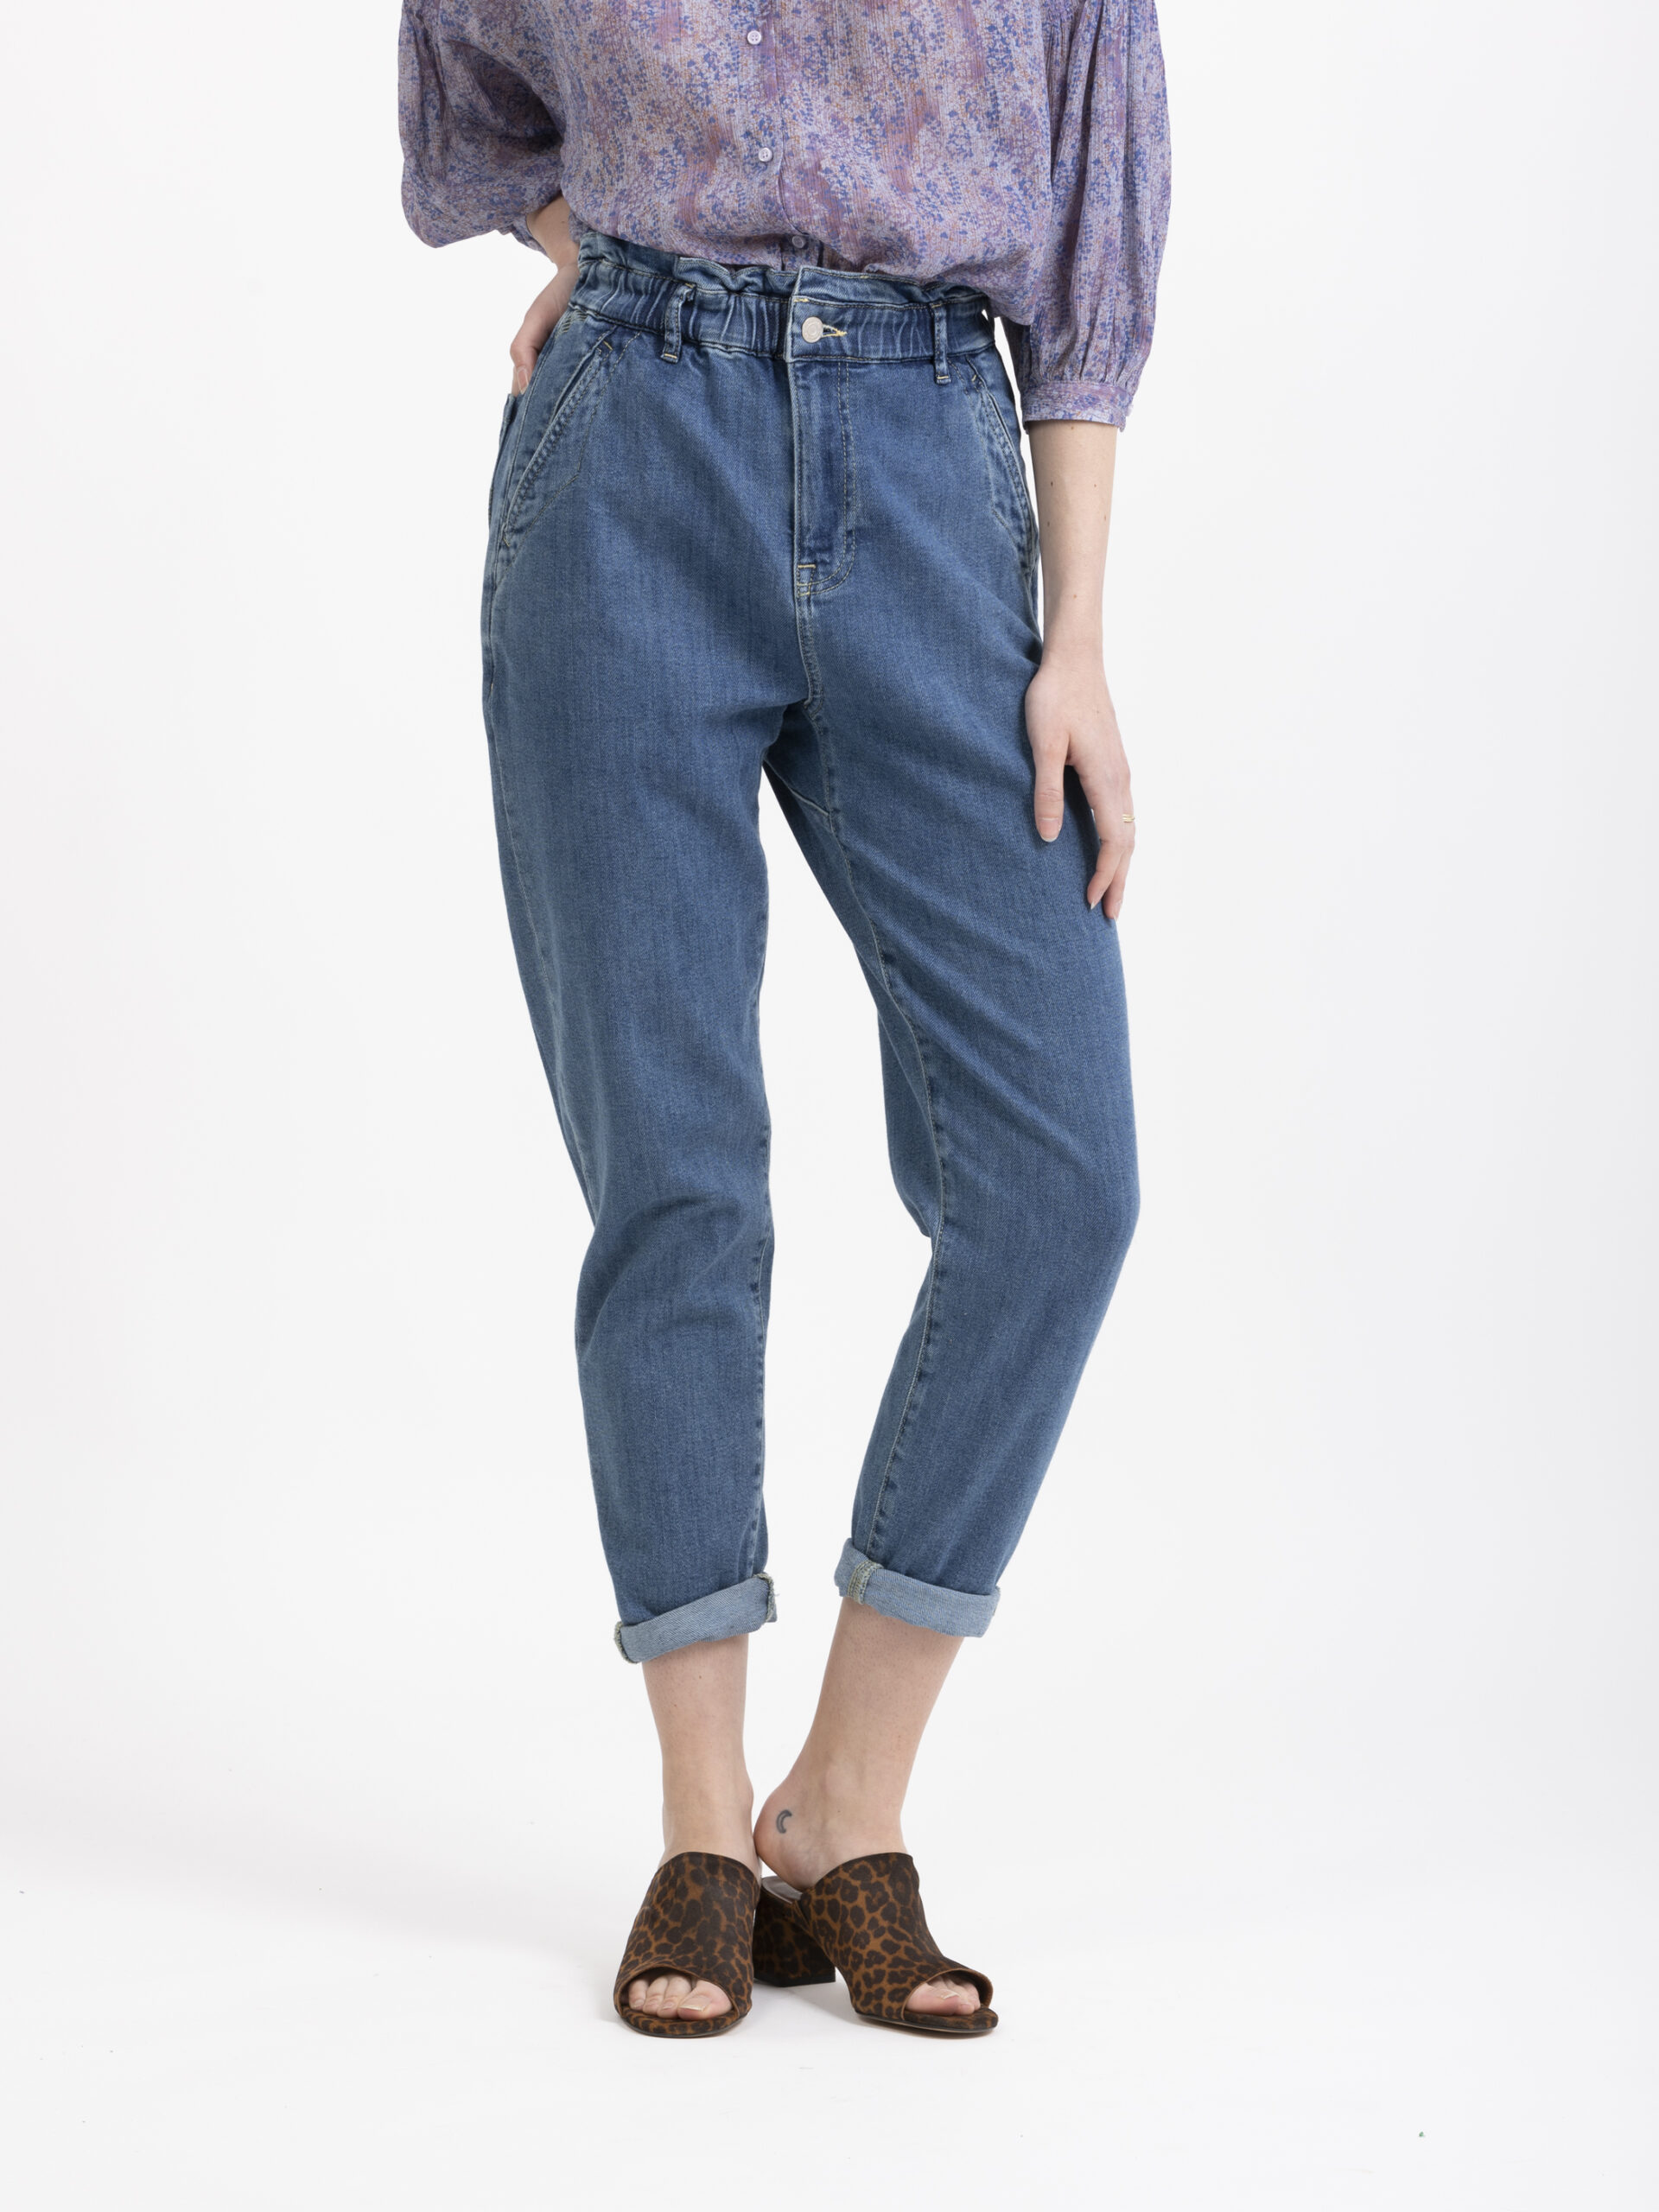 bahia-jeans-denim-baggy-elasticated-waist-reiko-matchboxtahens